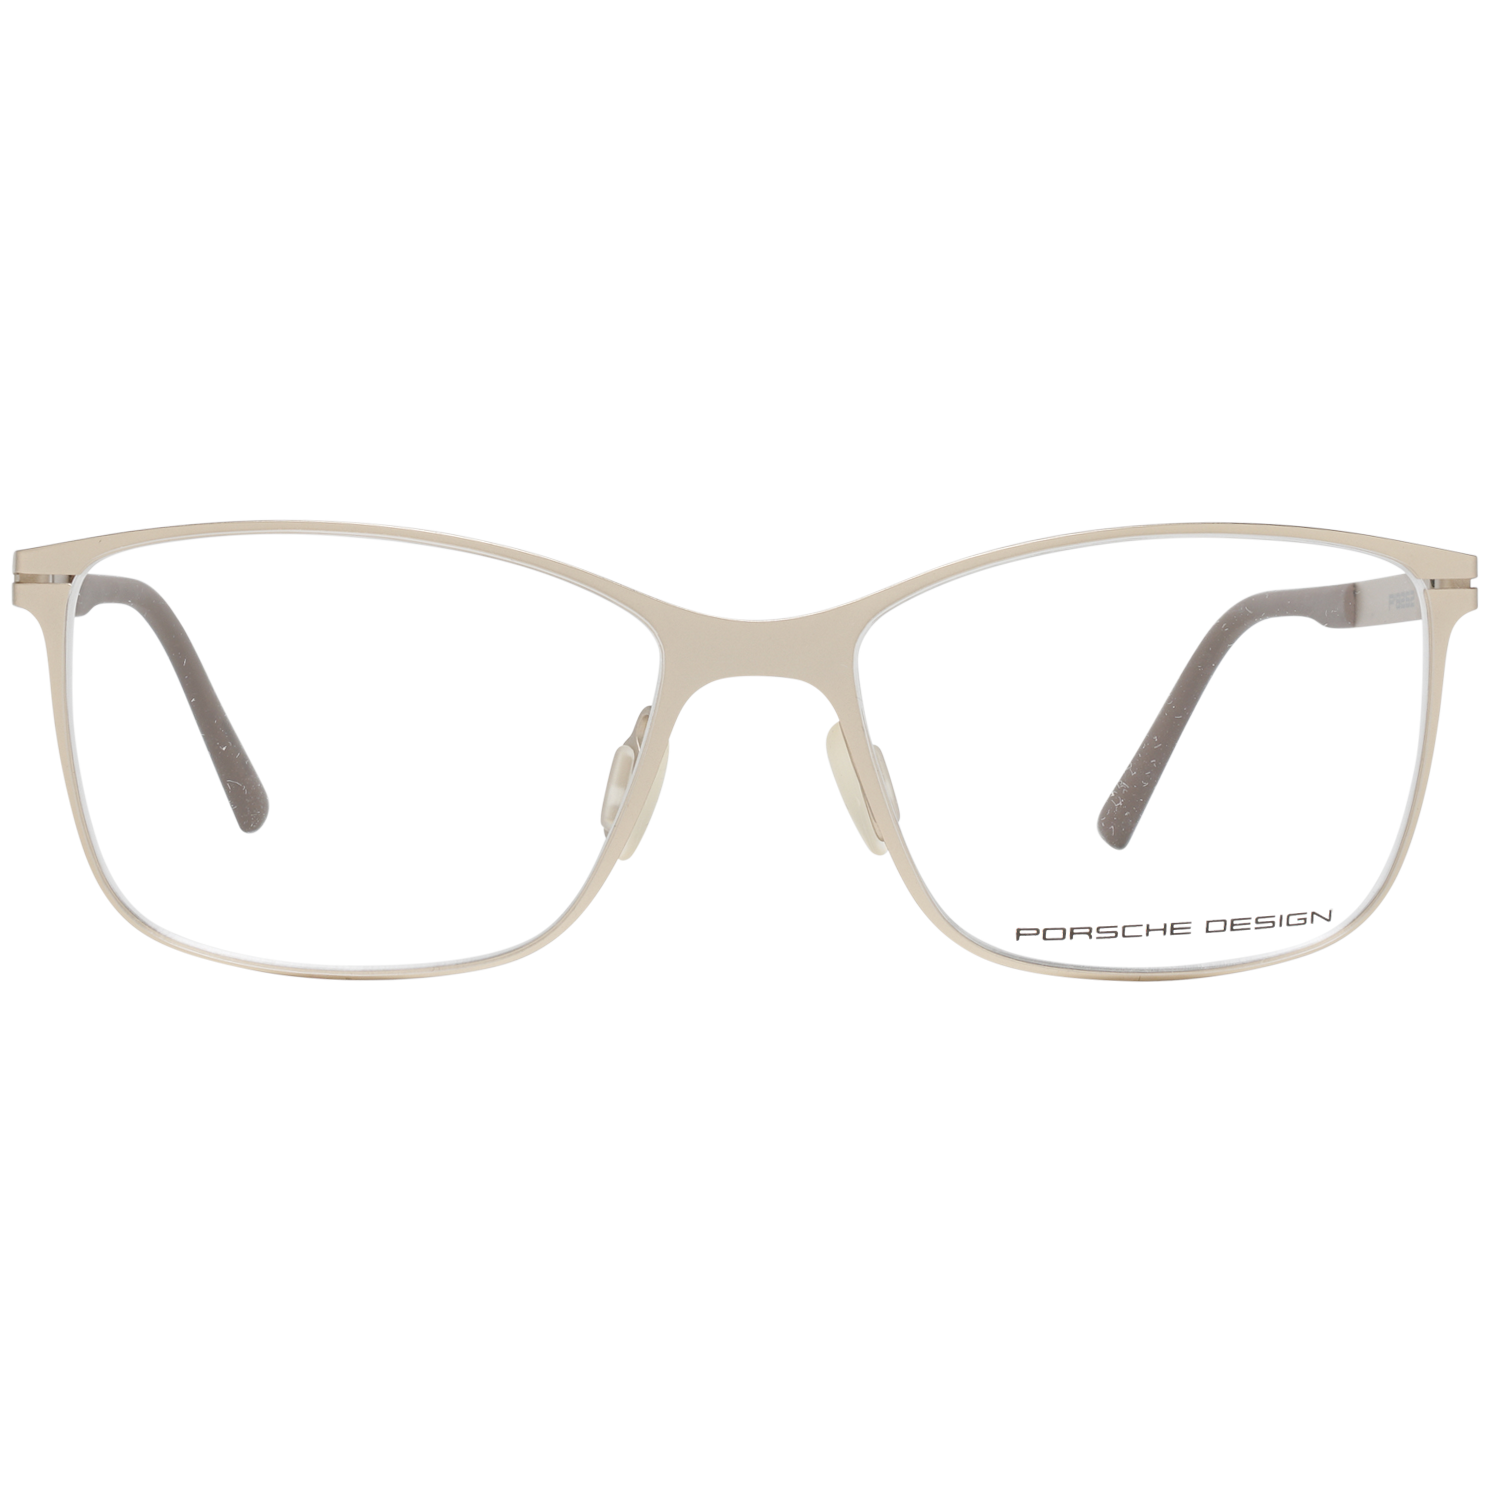 Porsche Design Eyeglasses Porsche Design Glasses Frames P8262 C 54 Eyeglasses Eyewear UK USA Australia 